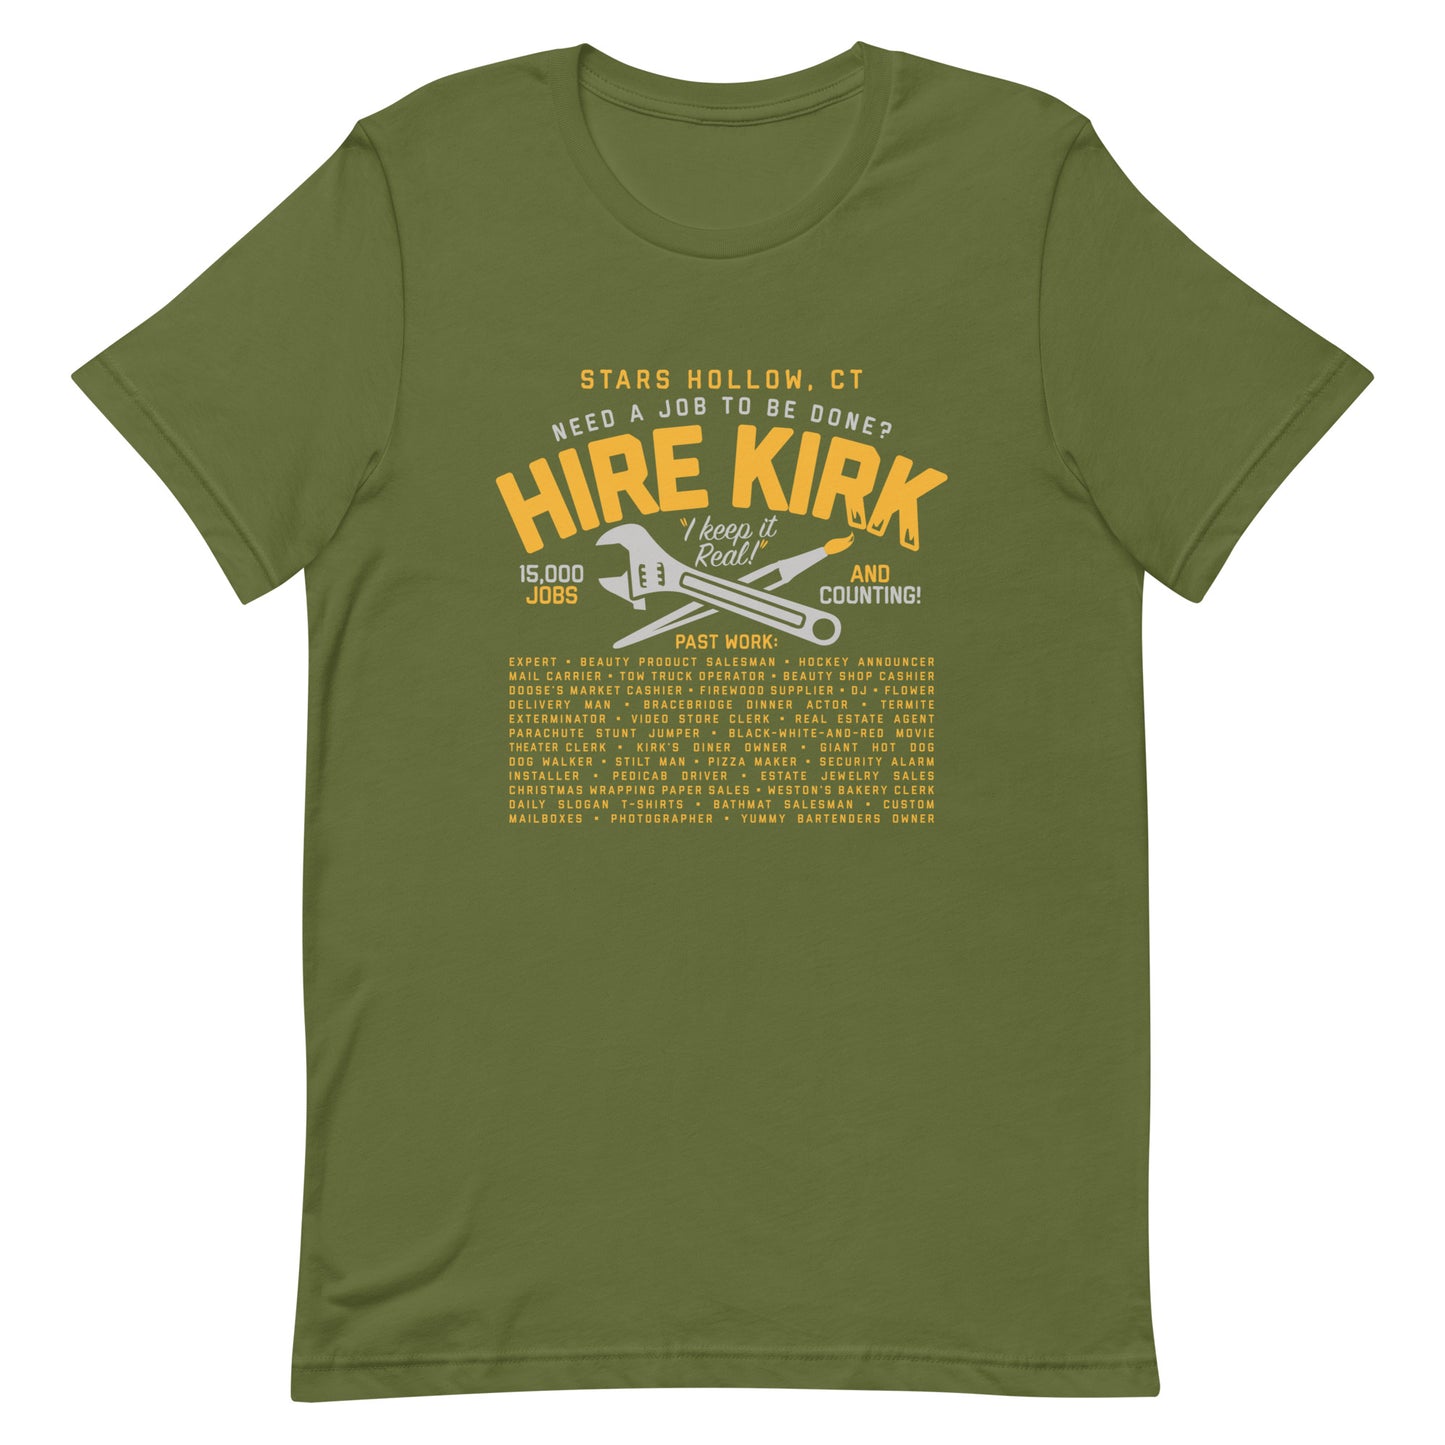 Hire Kirk Men's Signature Tee